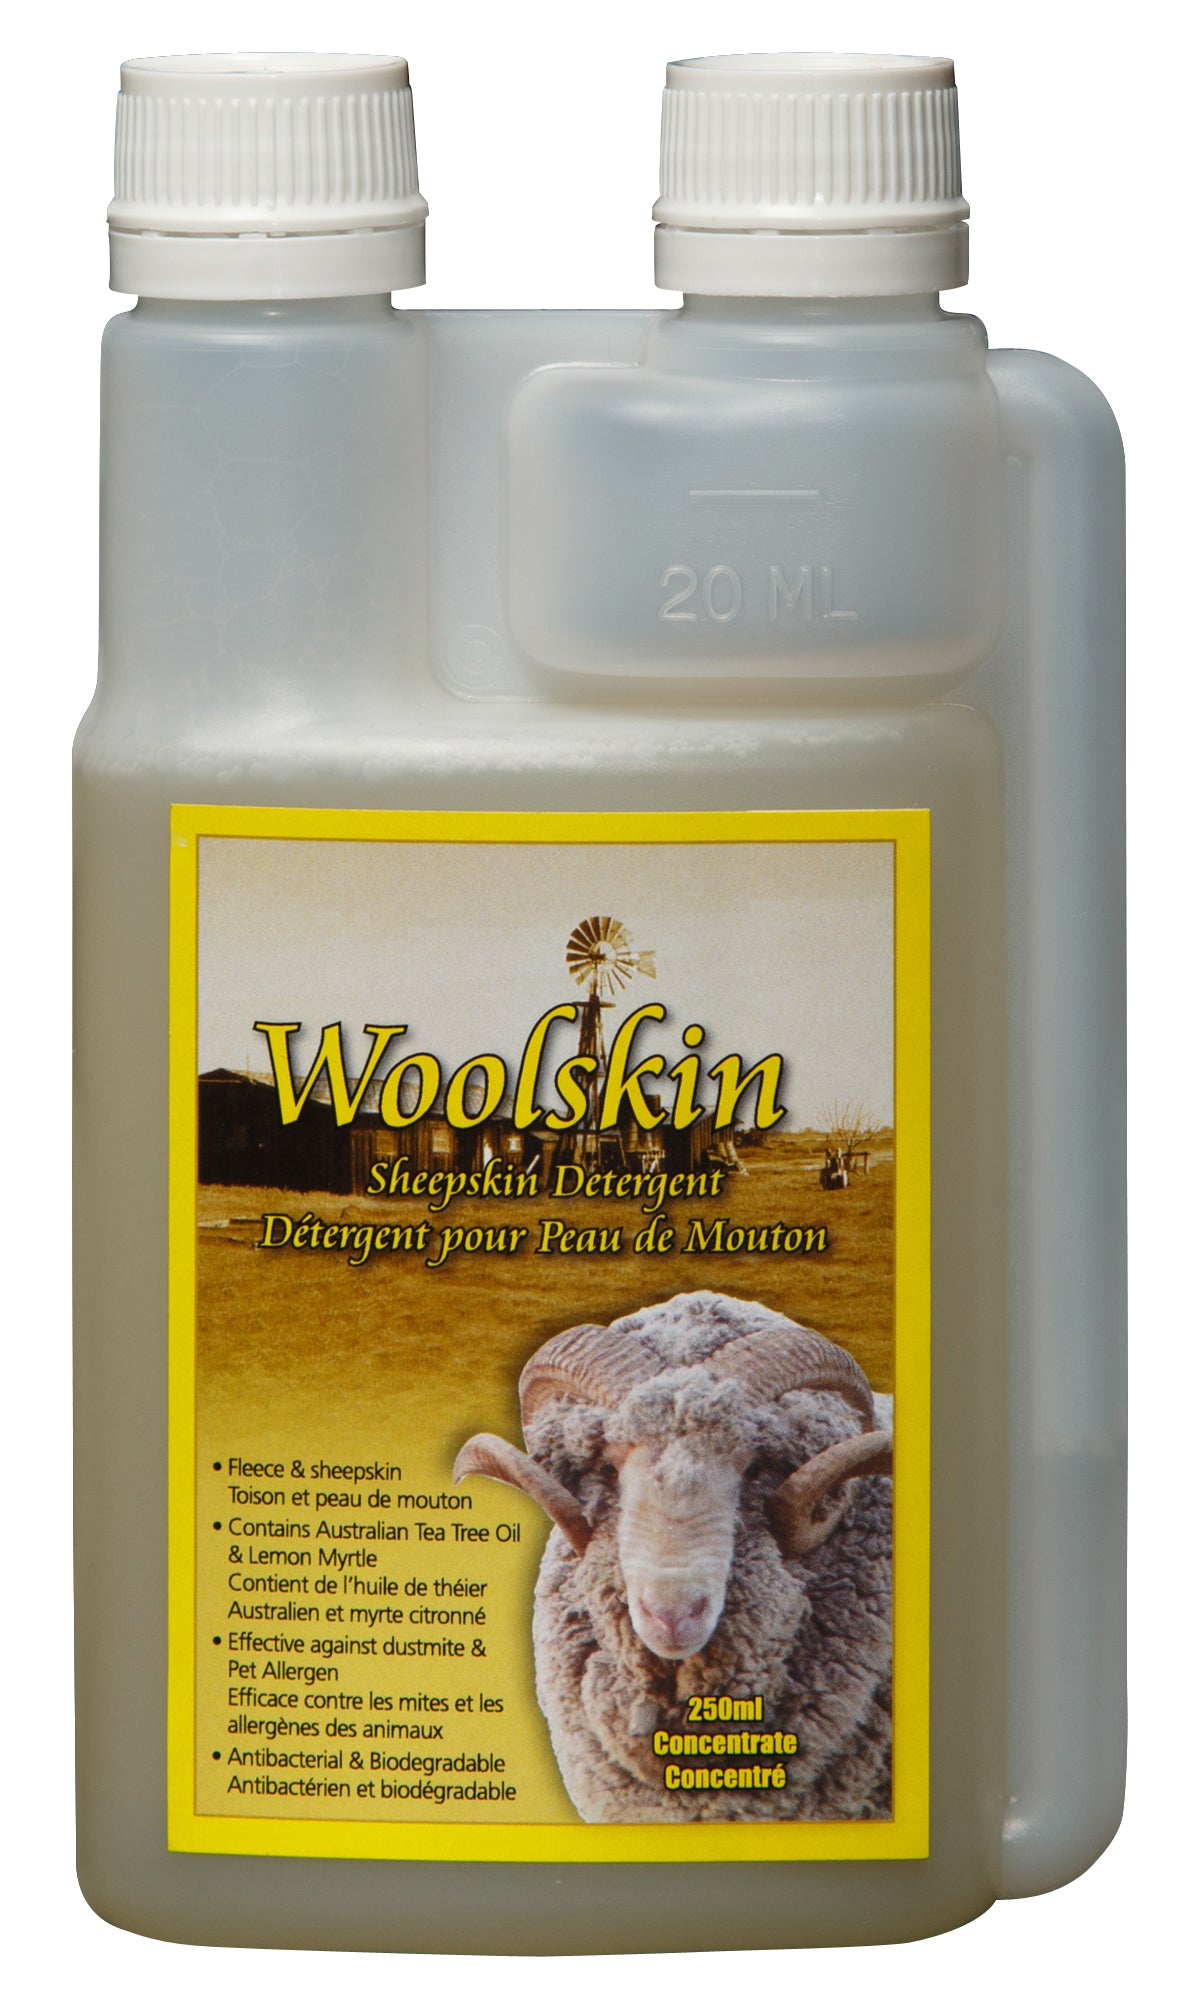 Tantech Woolskin shampoo and woolwash